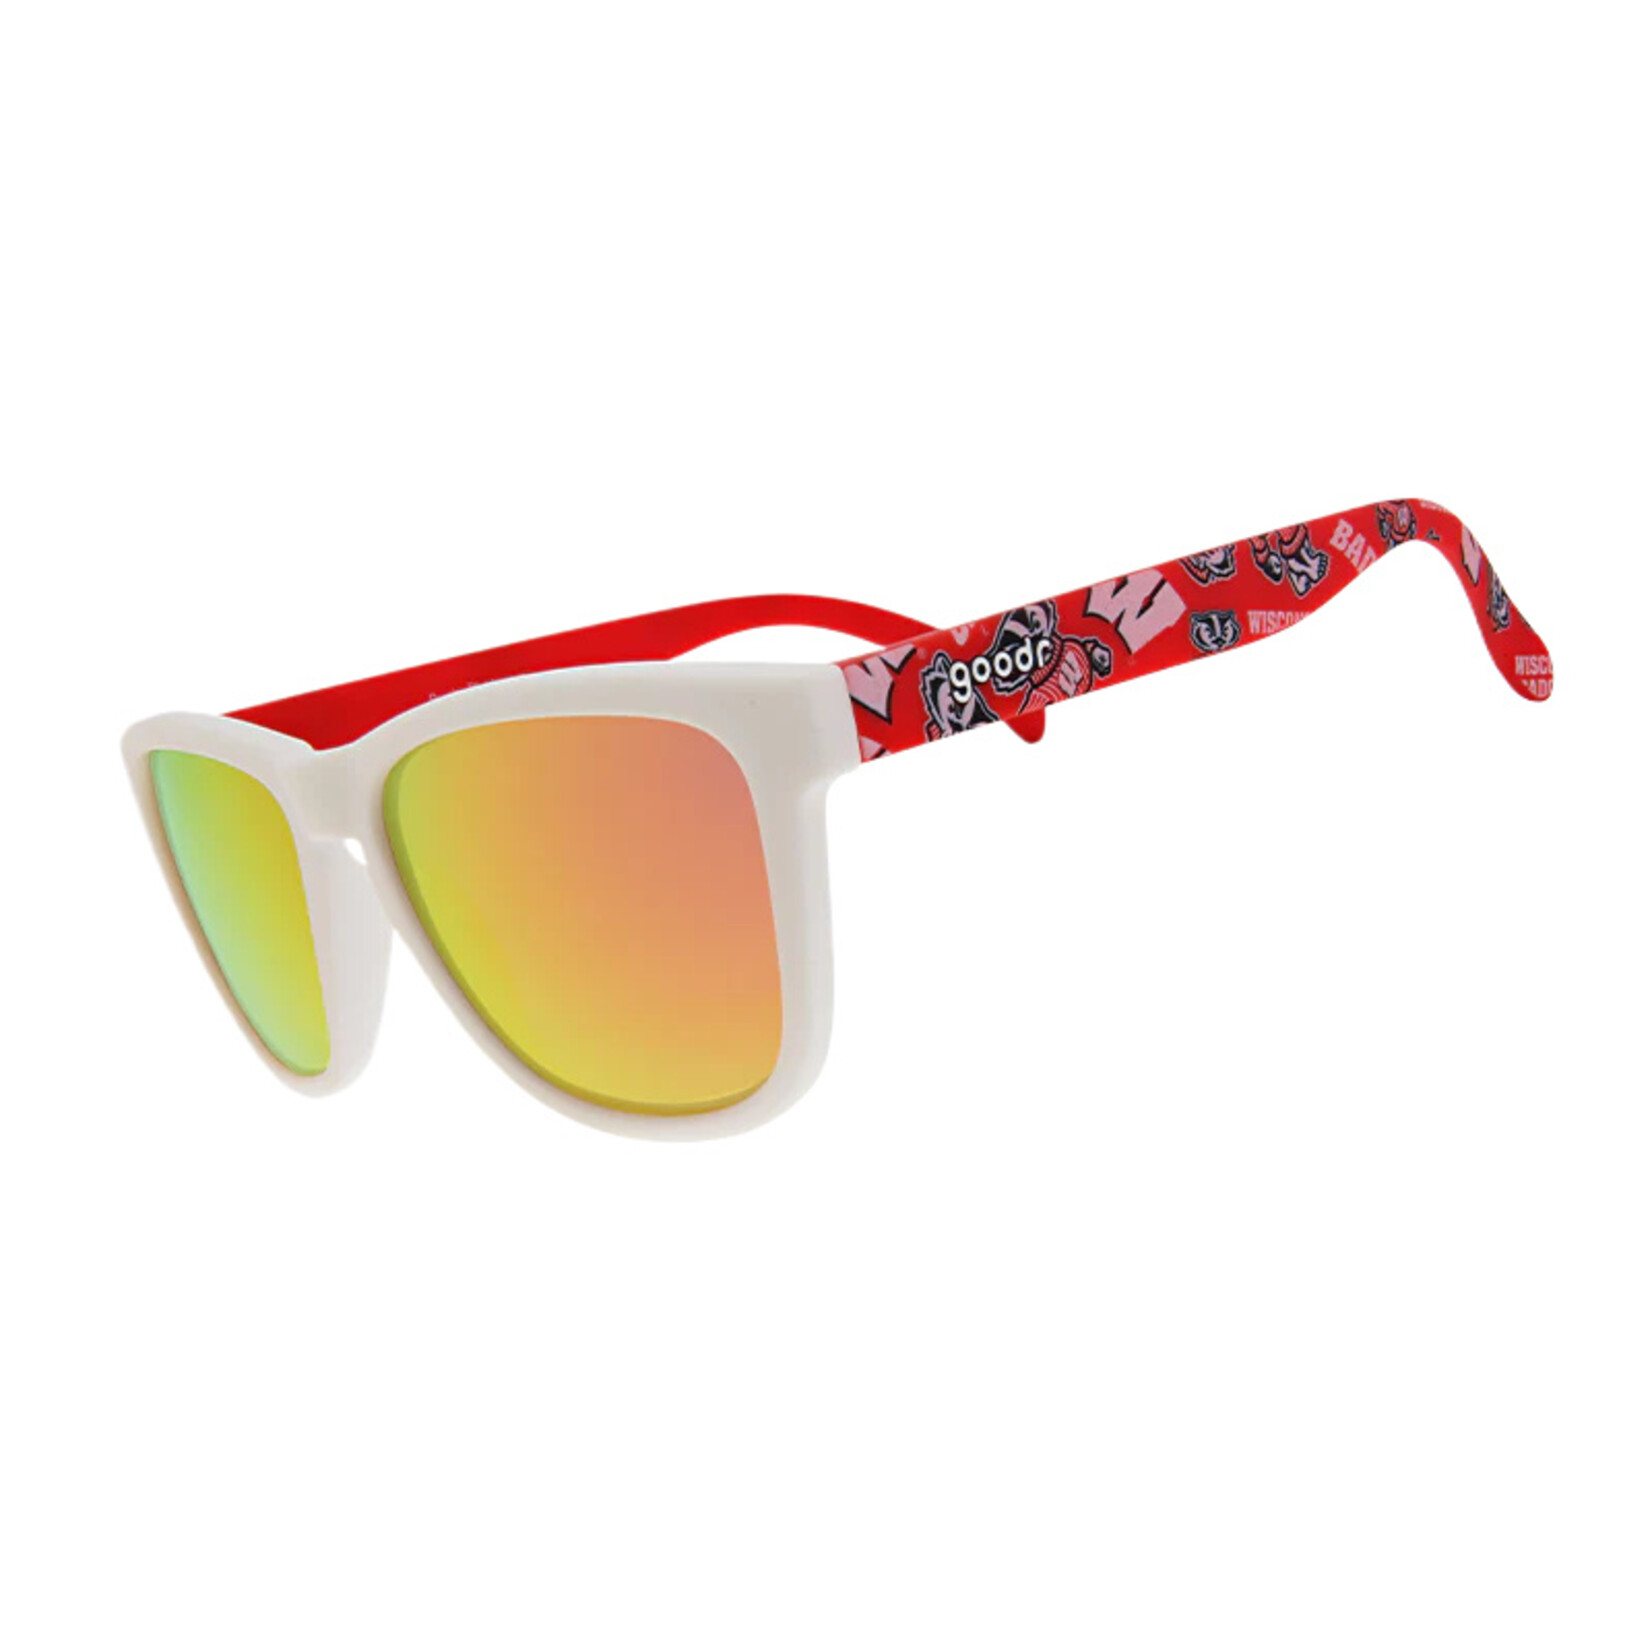 Goodr Goodr "Bucky Vision" Sunglasses